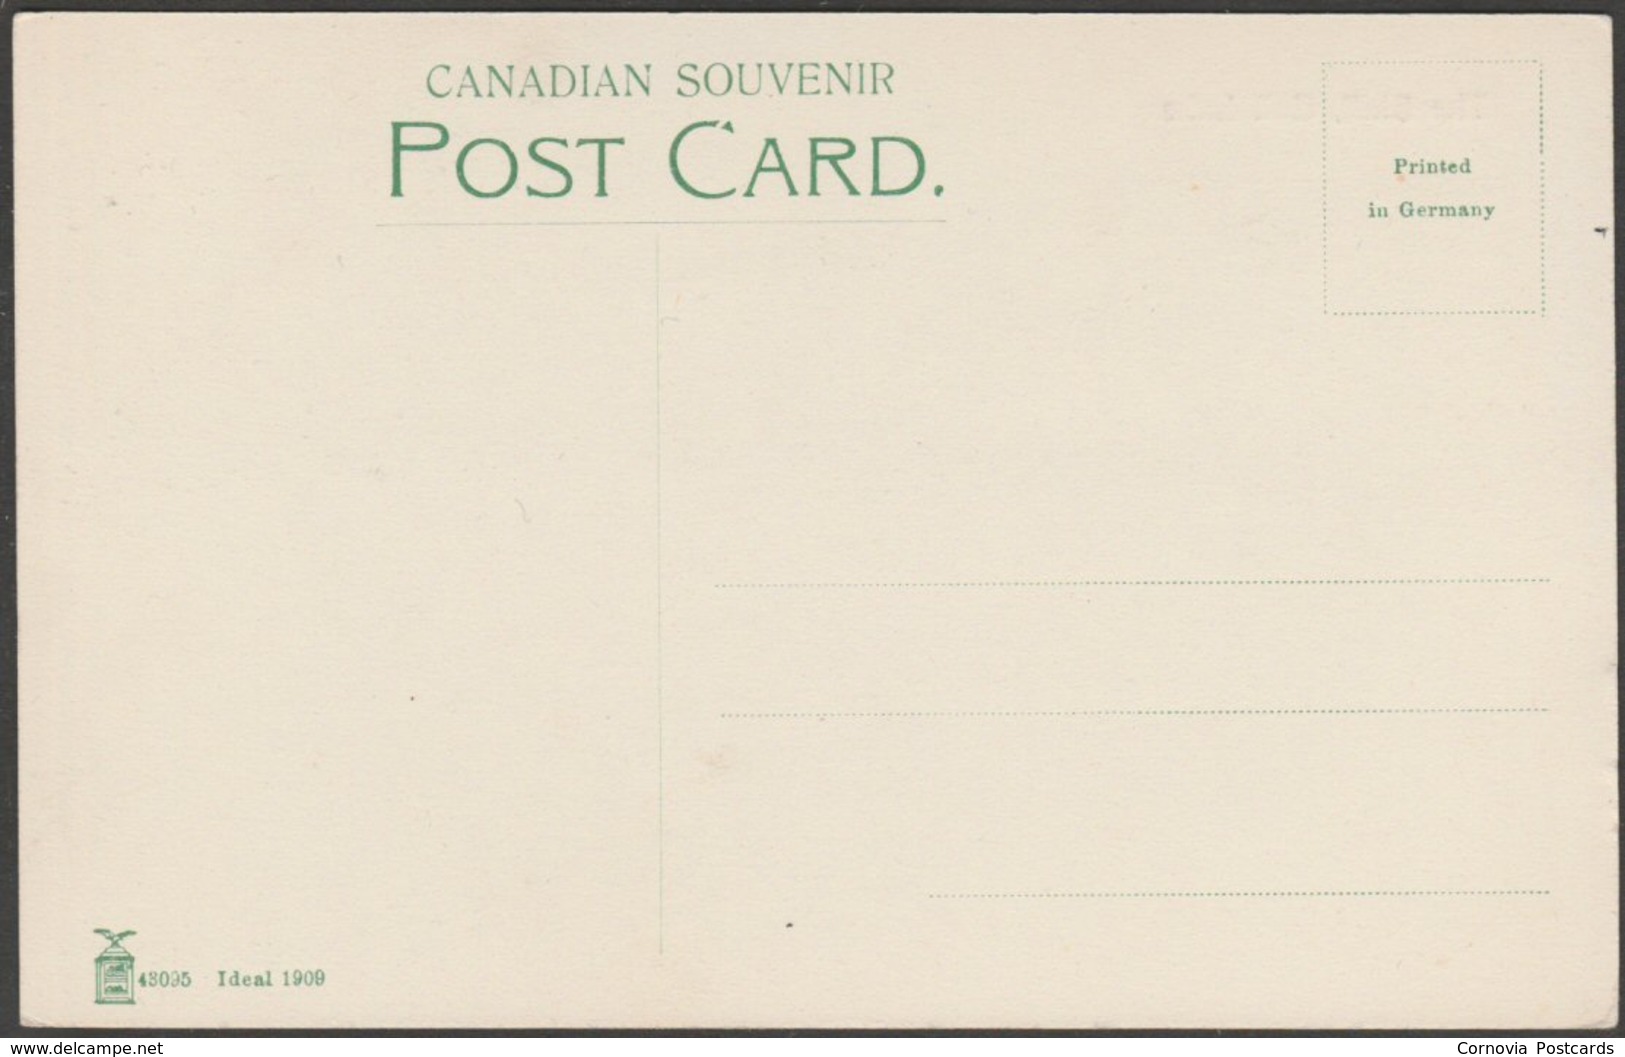 The Bluff, Gull Lake, Ontario, 1909 - Ideal Postcard - Muskoka